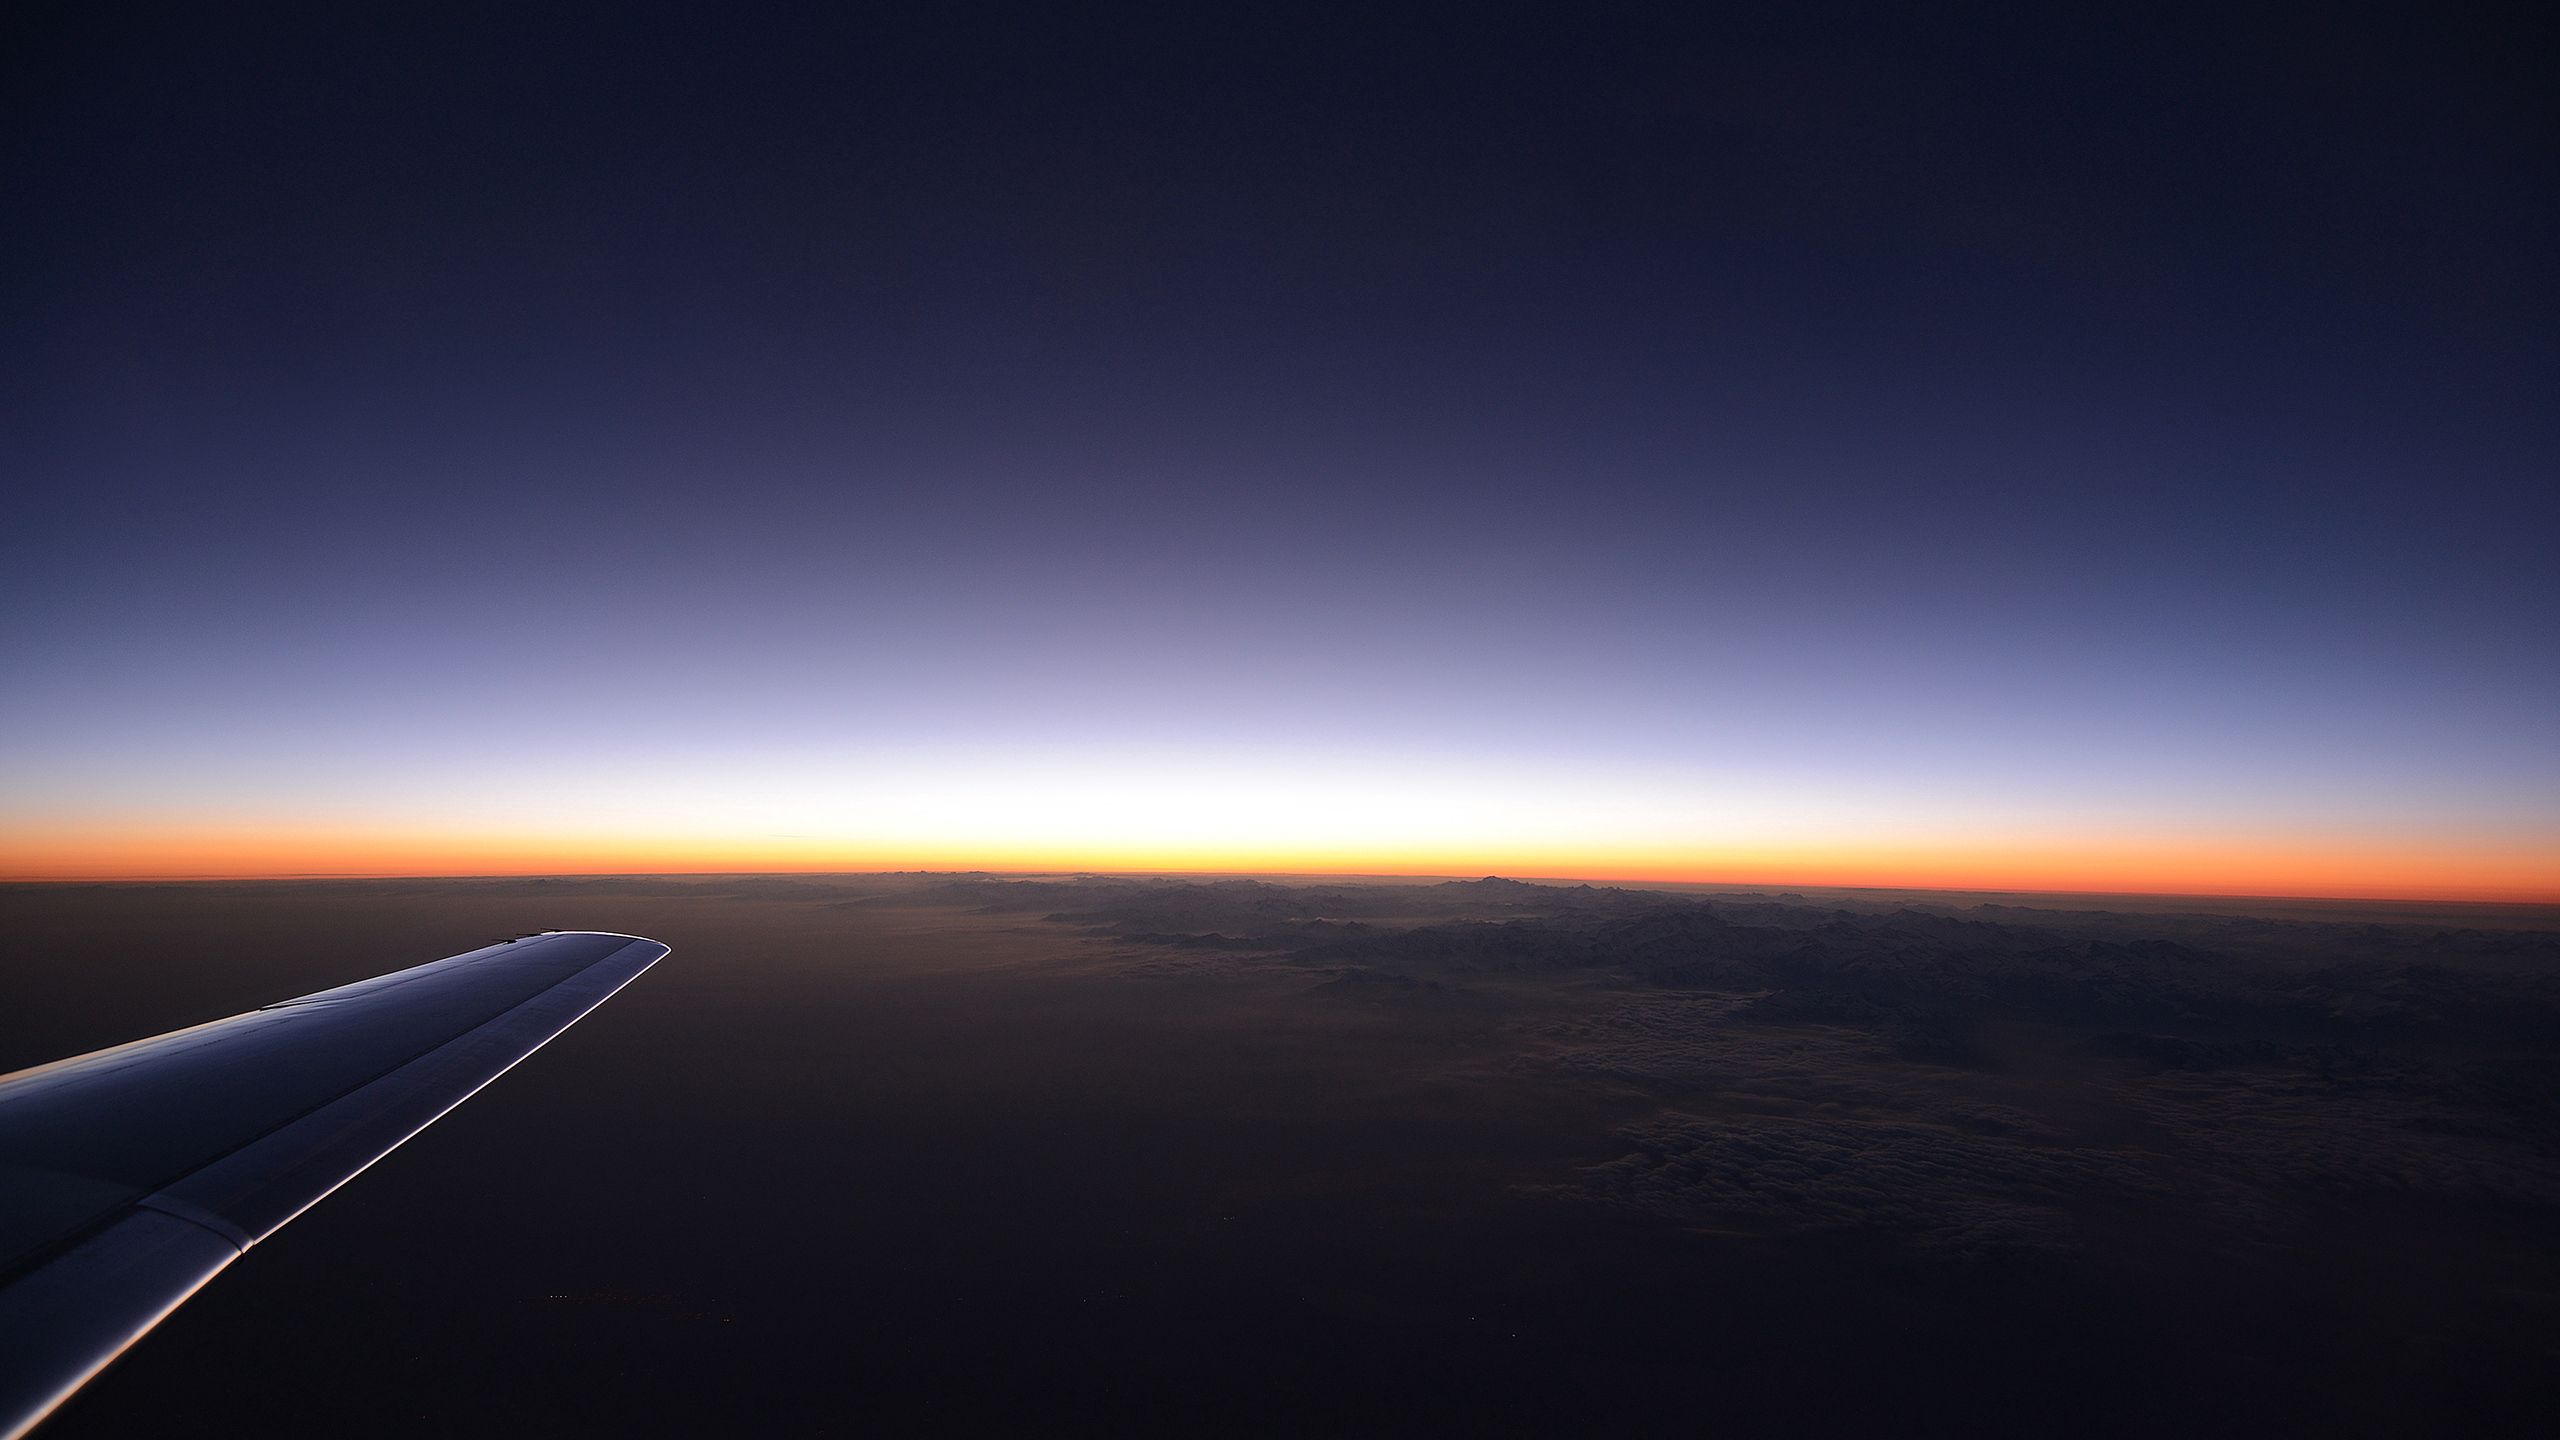 Download wallpaper 2560x1440 plane, flight, sky, beautiful, evening  widescreen 16:9 hd background